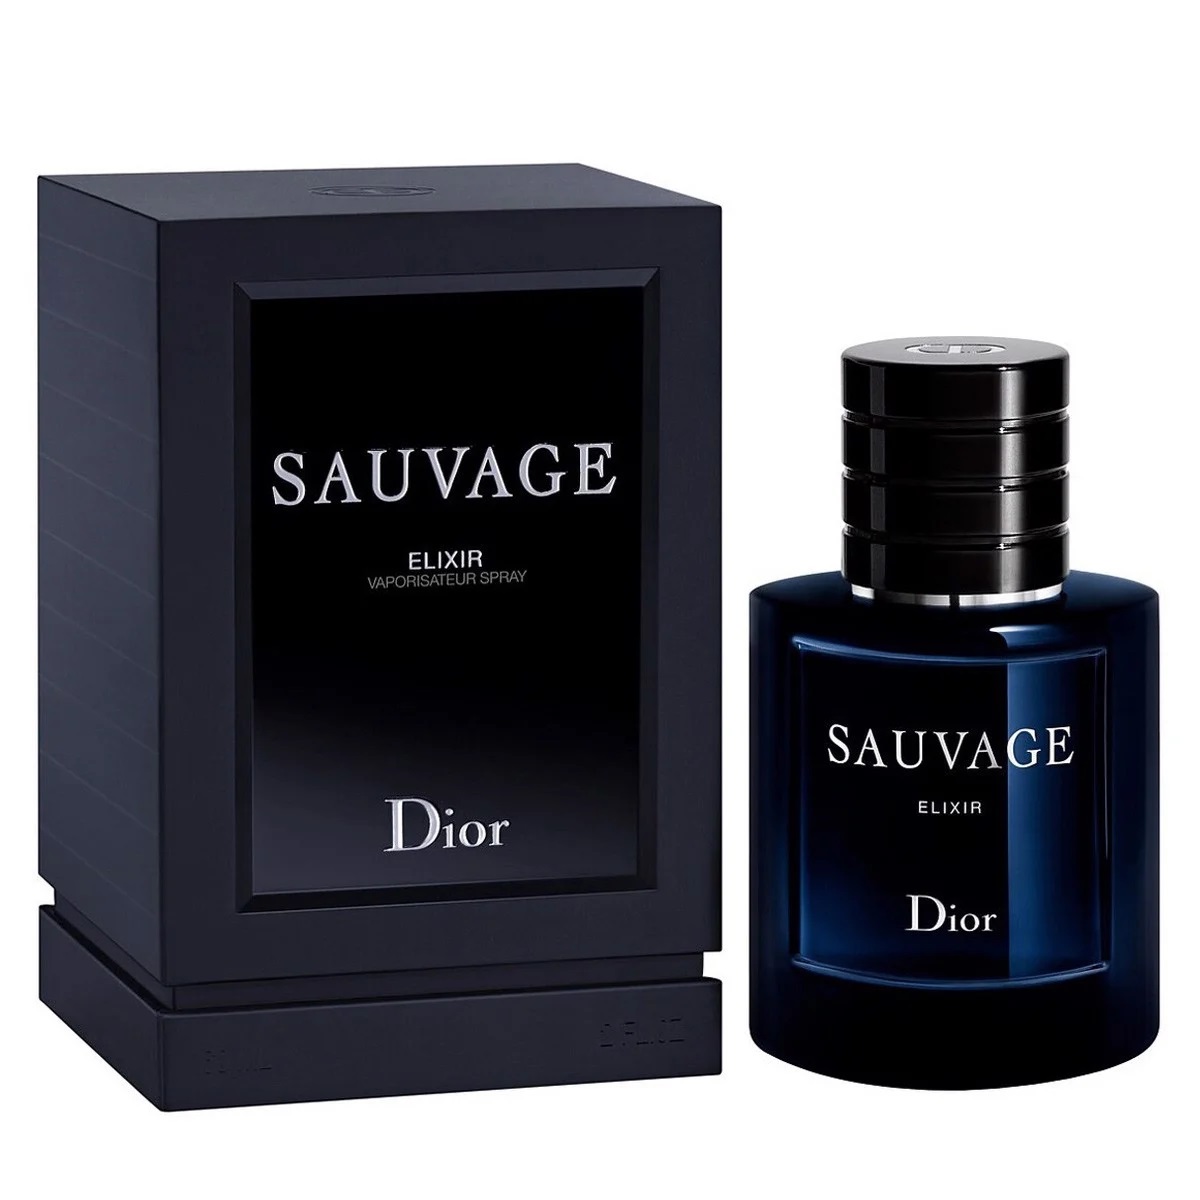 Dior Sauvage Parfum 2019